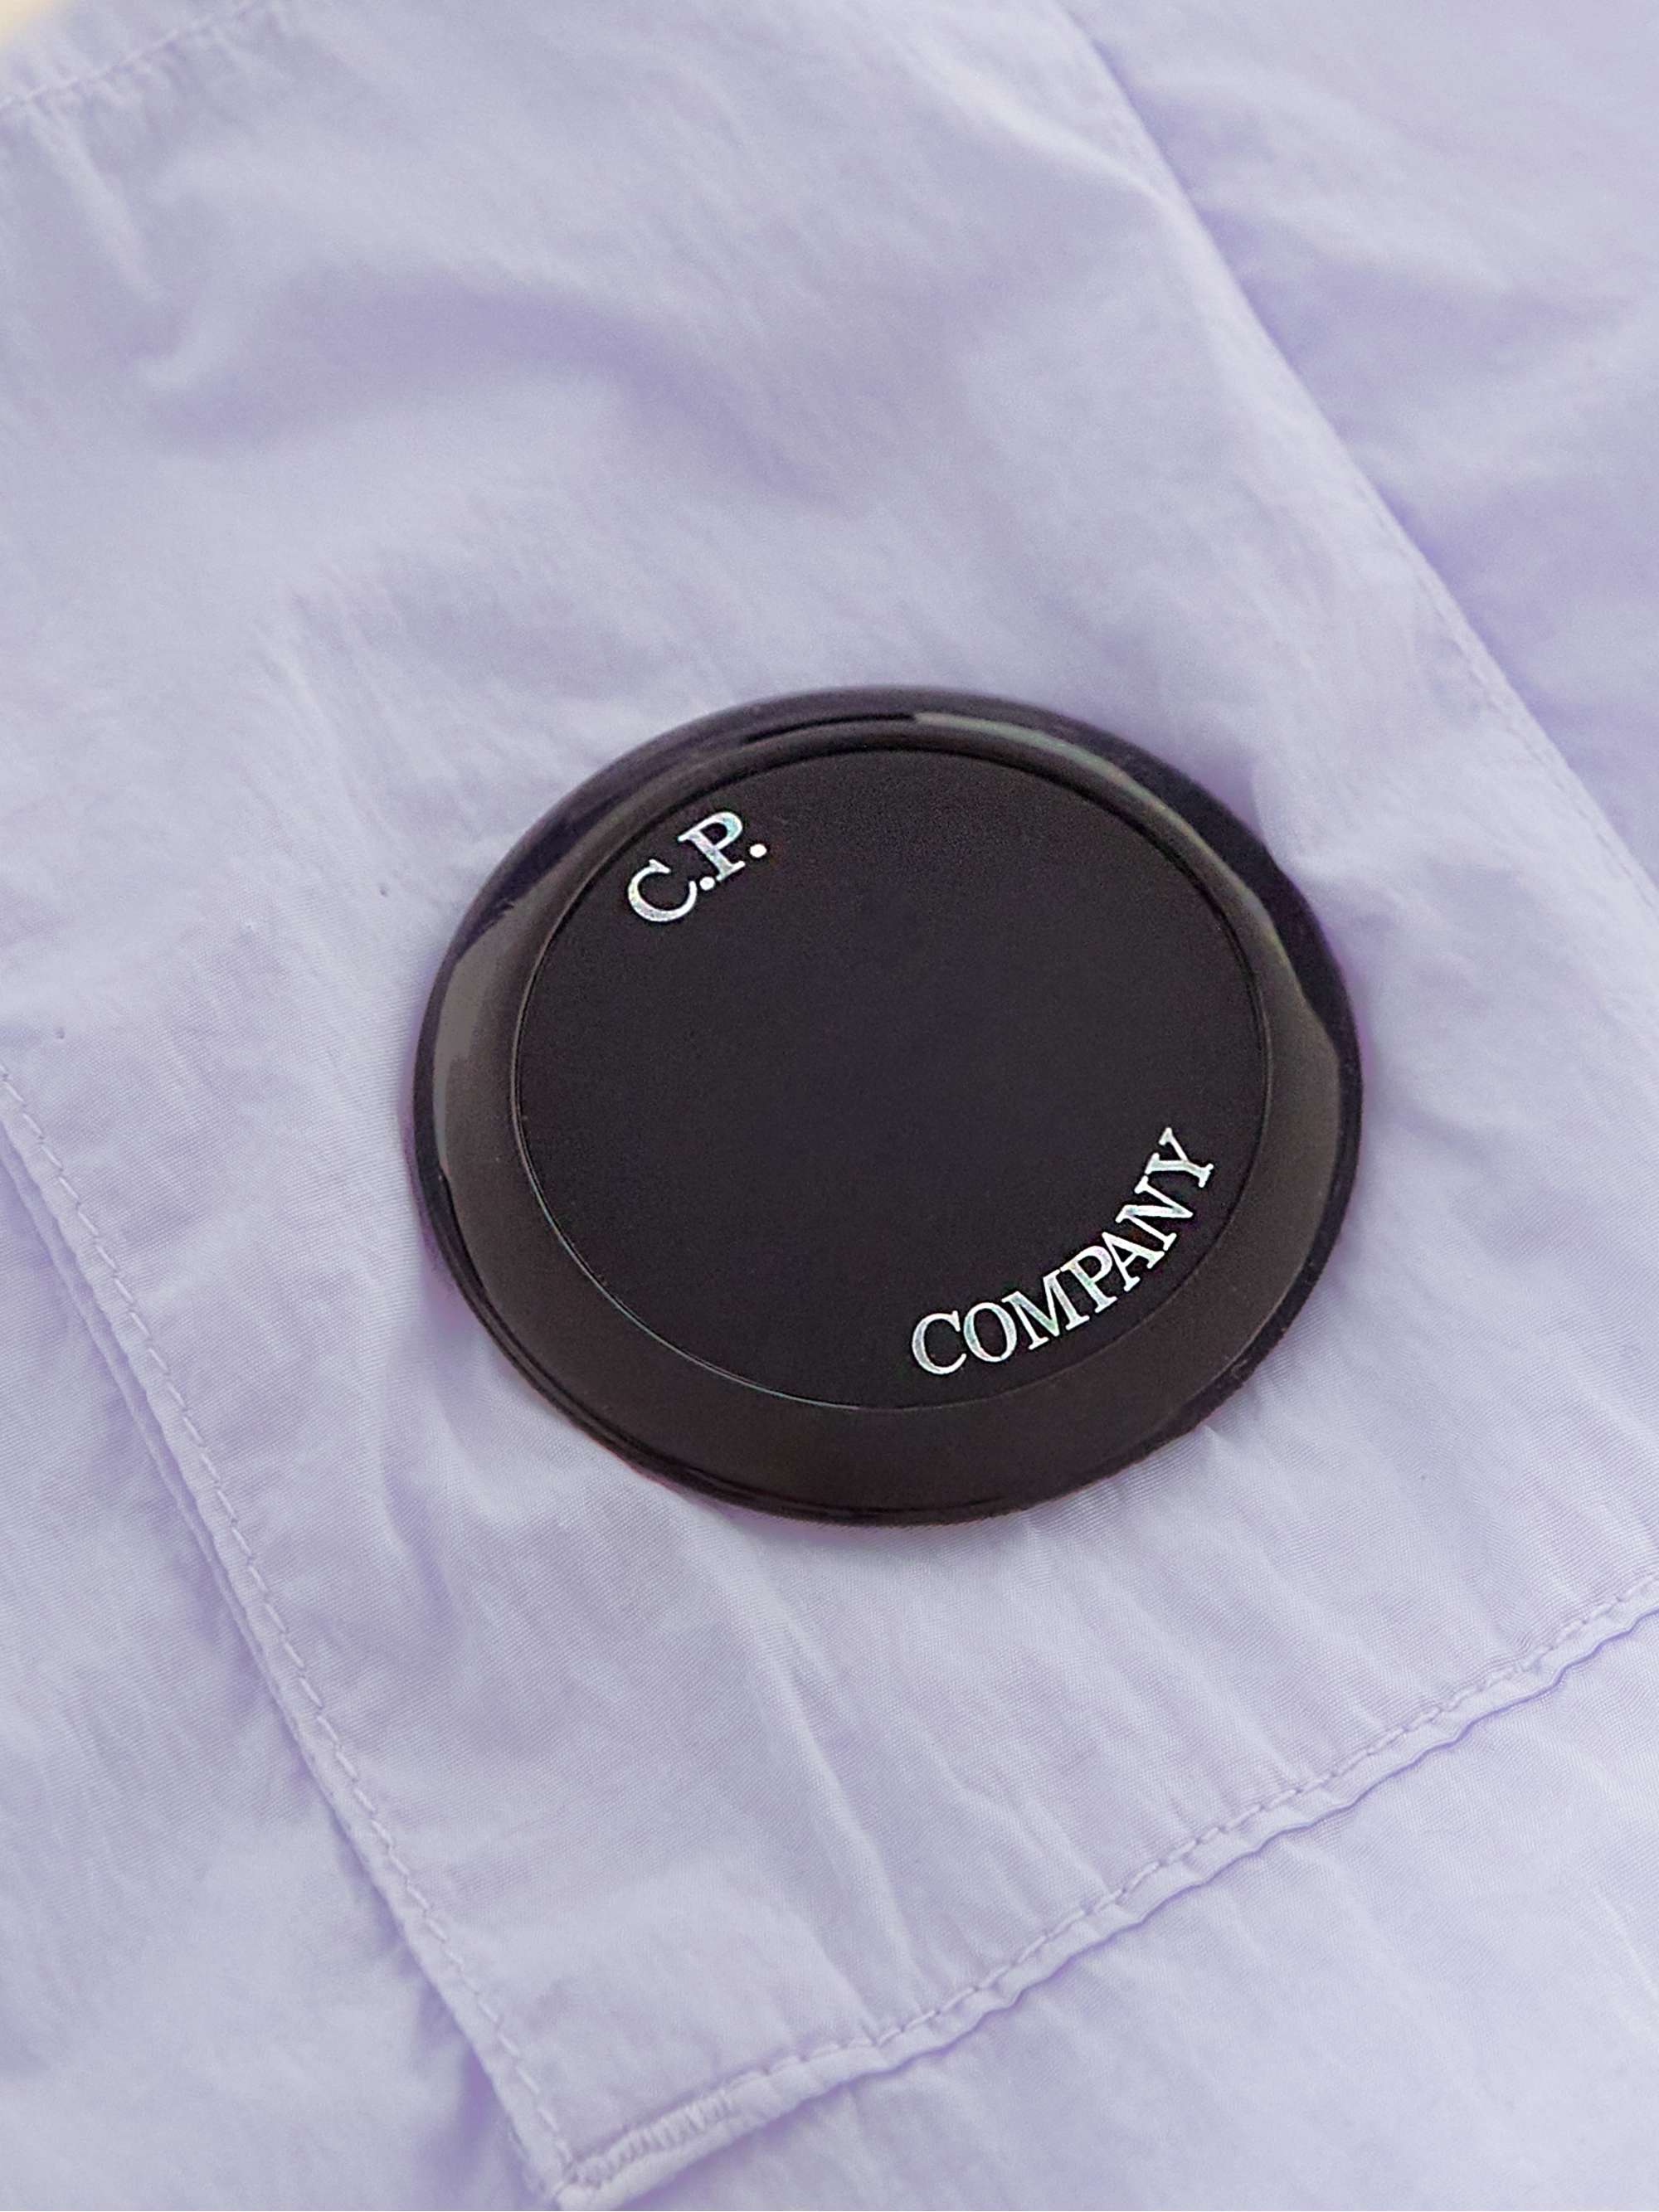 C.P. COMPANY Garment-Dyed Chrome-R Overshirt